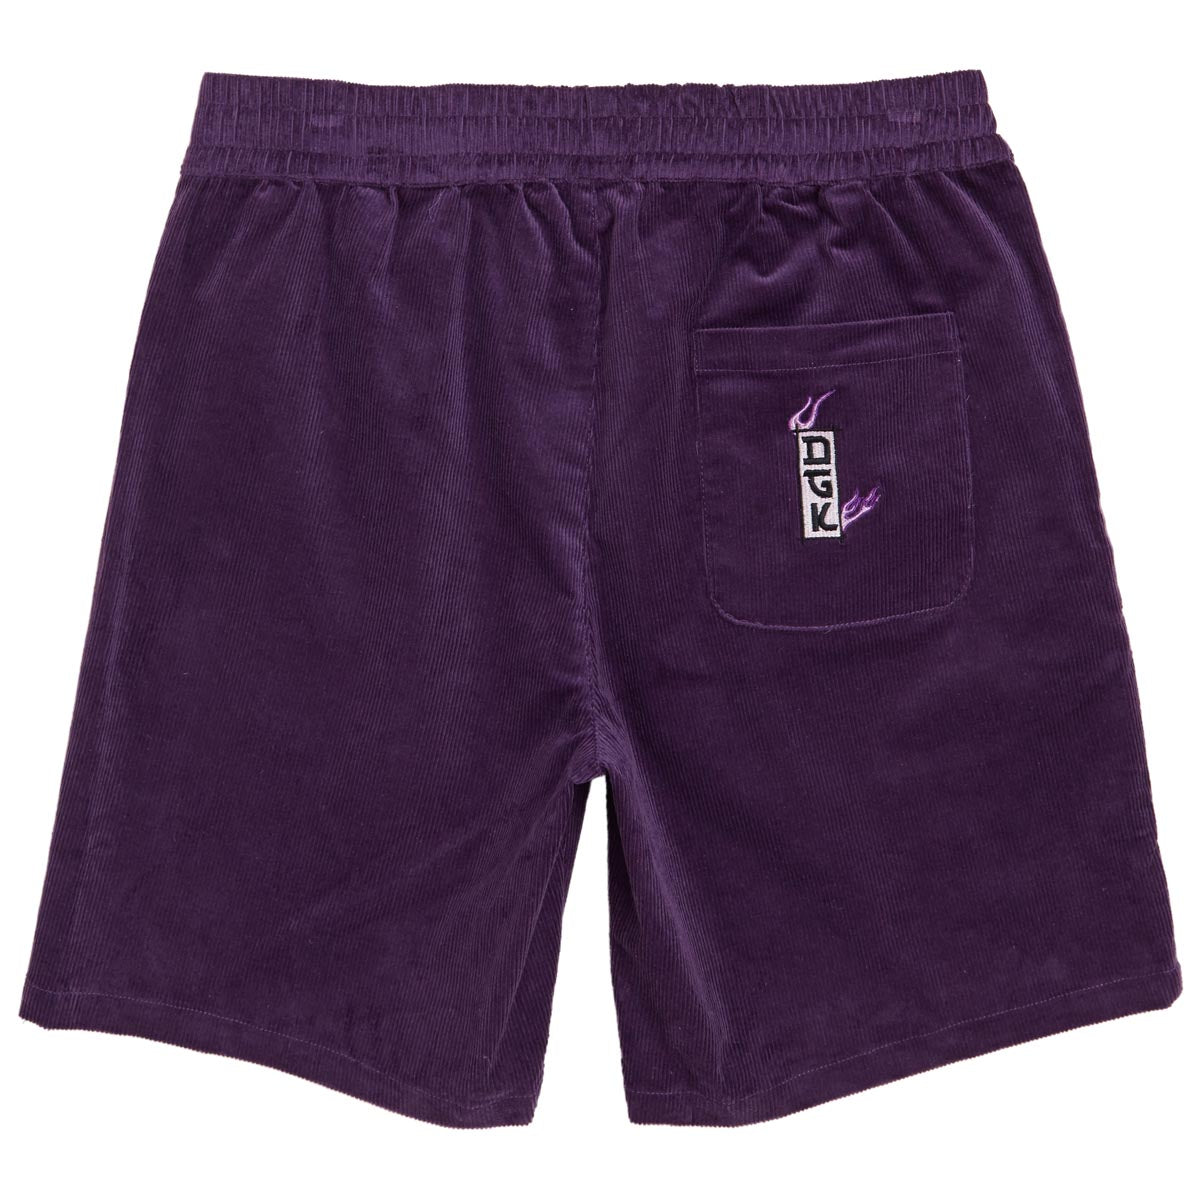 DGK Fire Blossom Shorts - Purple image 2